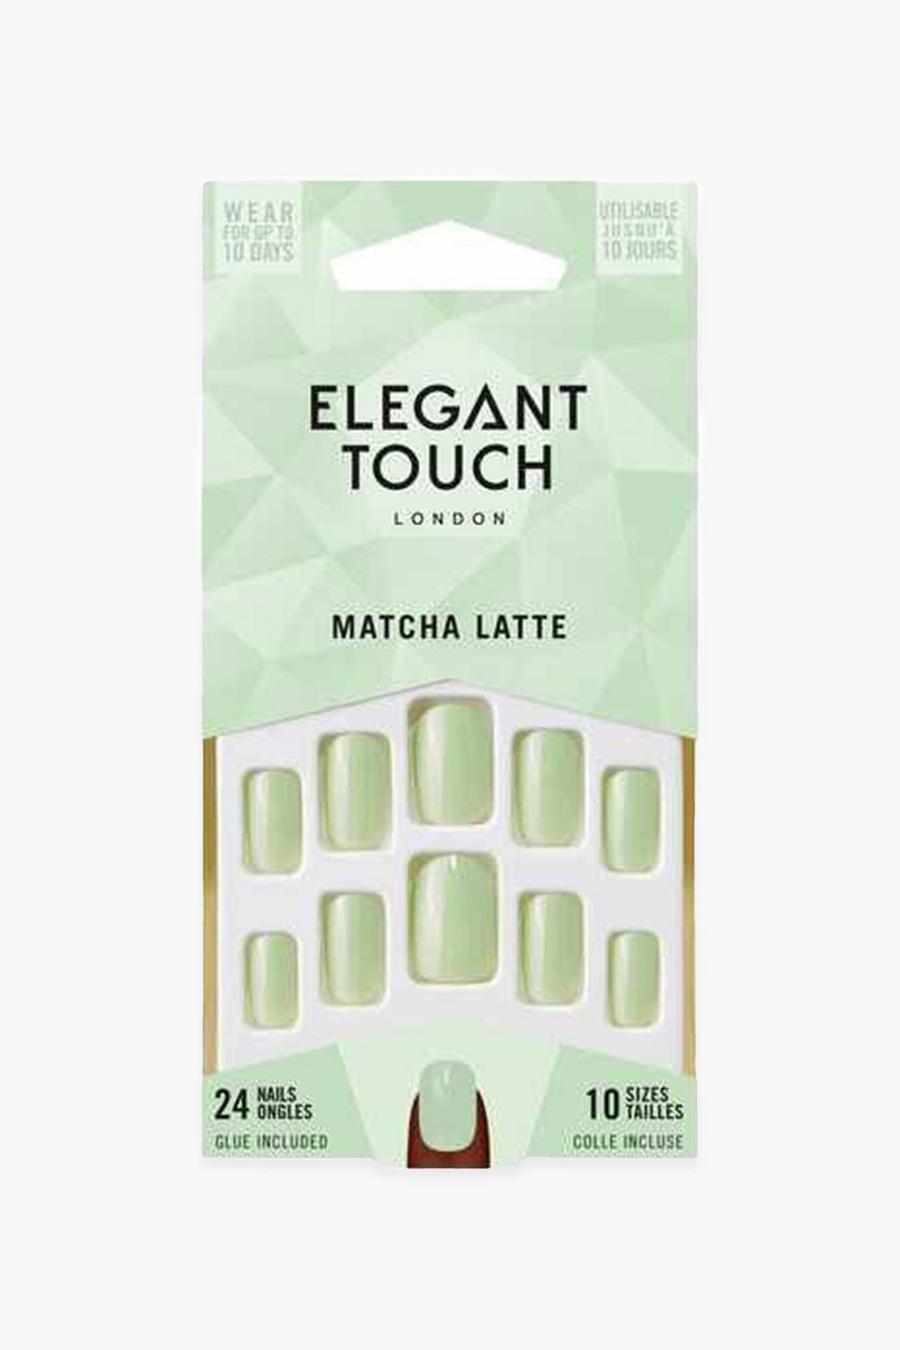 Green gerde Elegant Touch Matcha Latte False Nails 